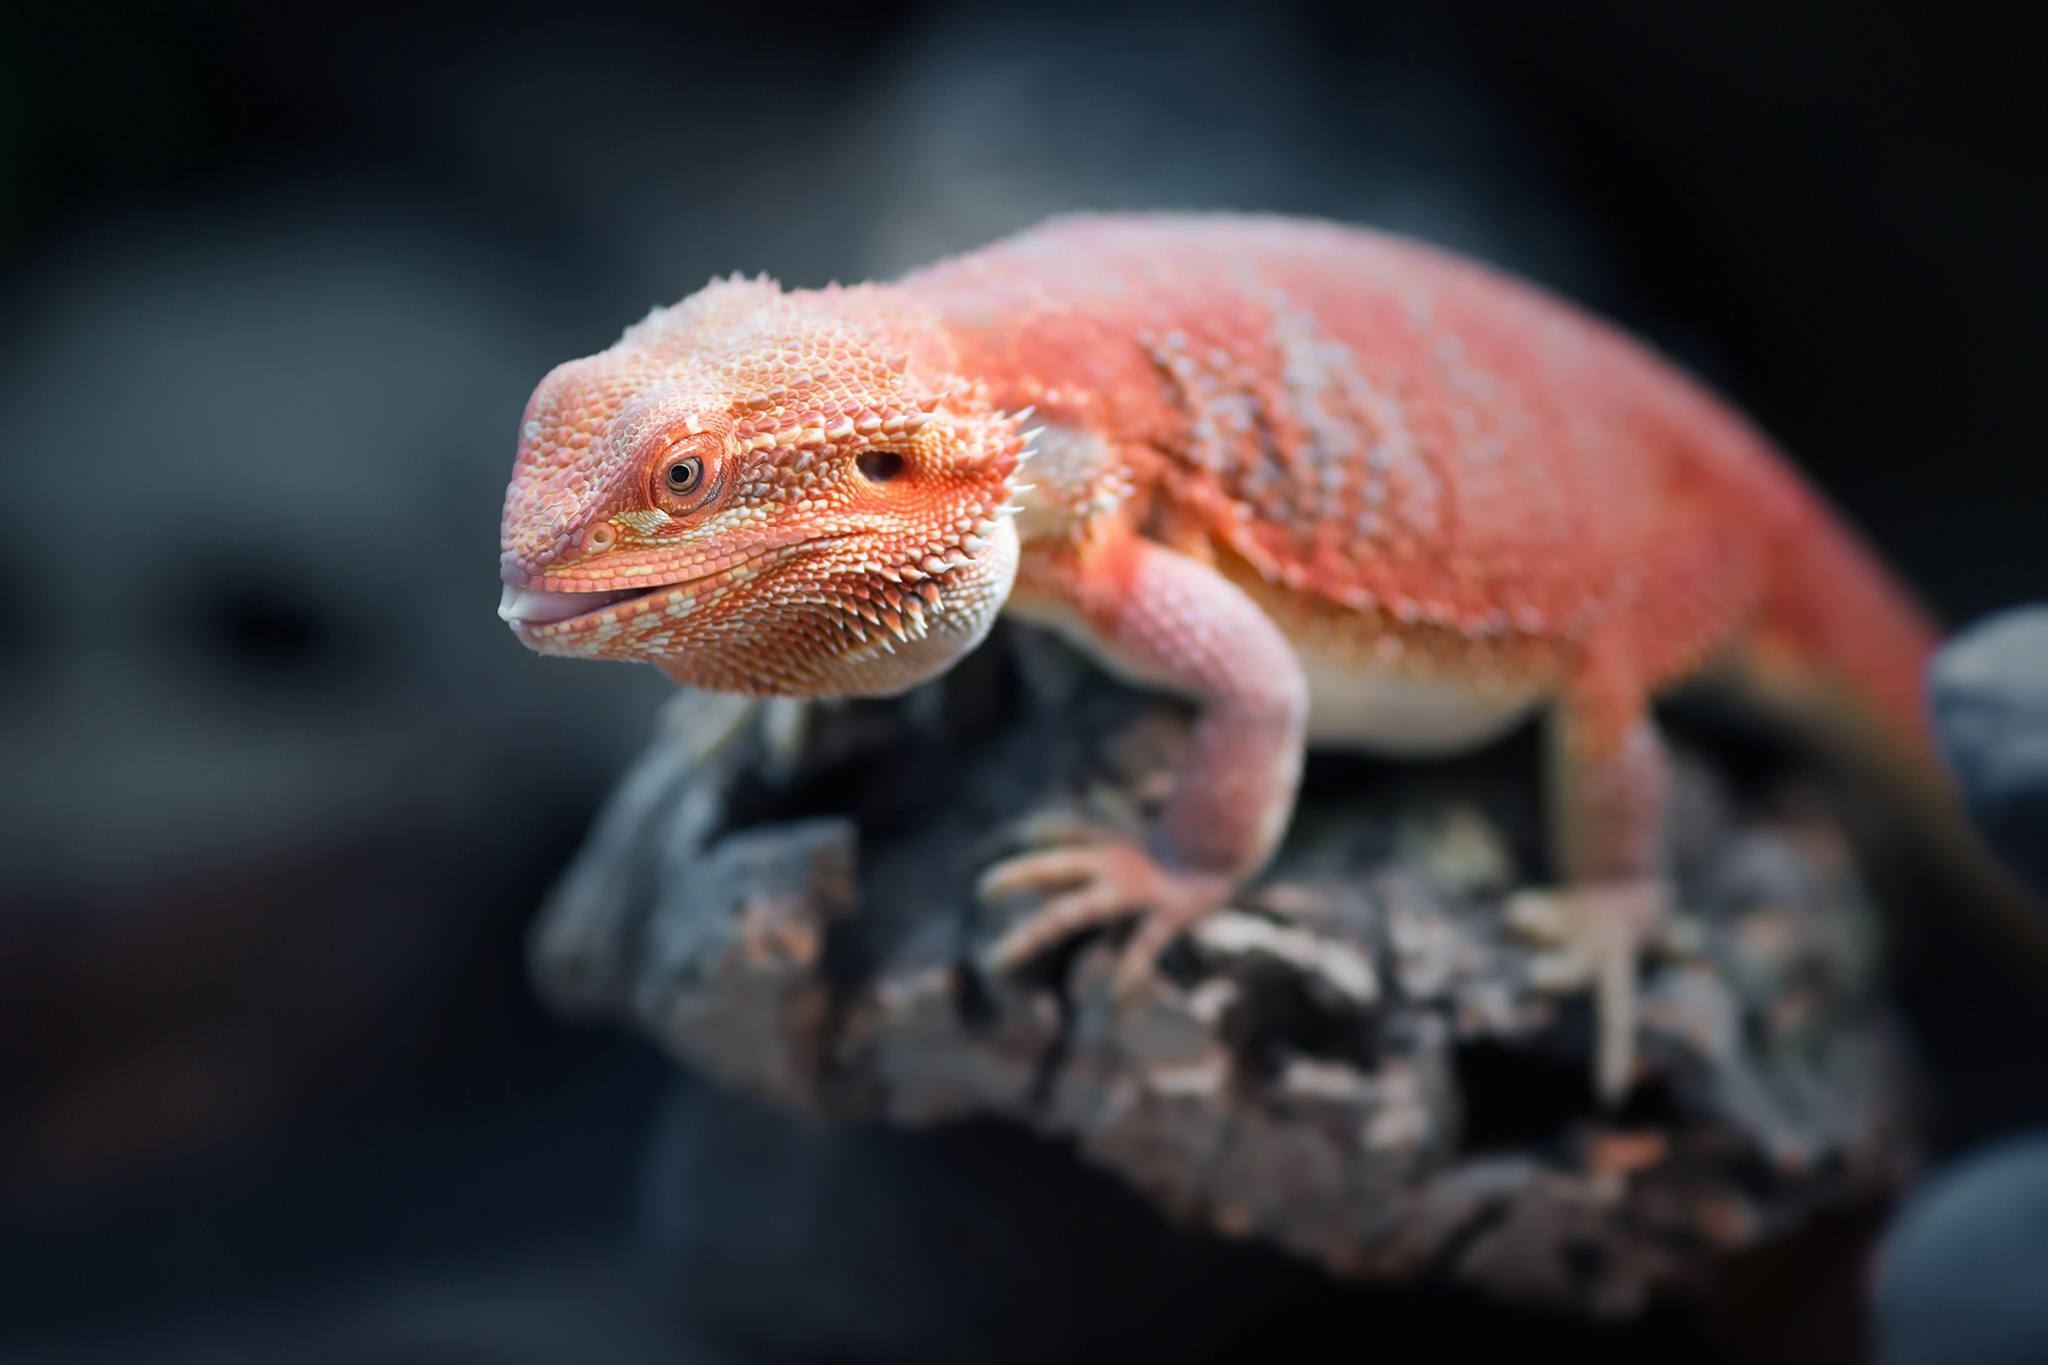 Animals Reptiles Blurred Orange Bearded Dragon 2048x1365